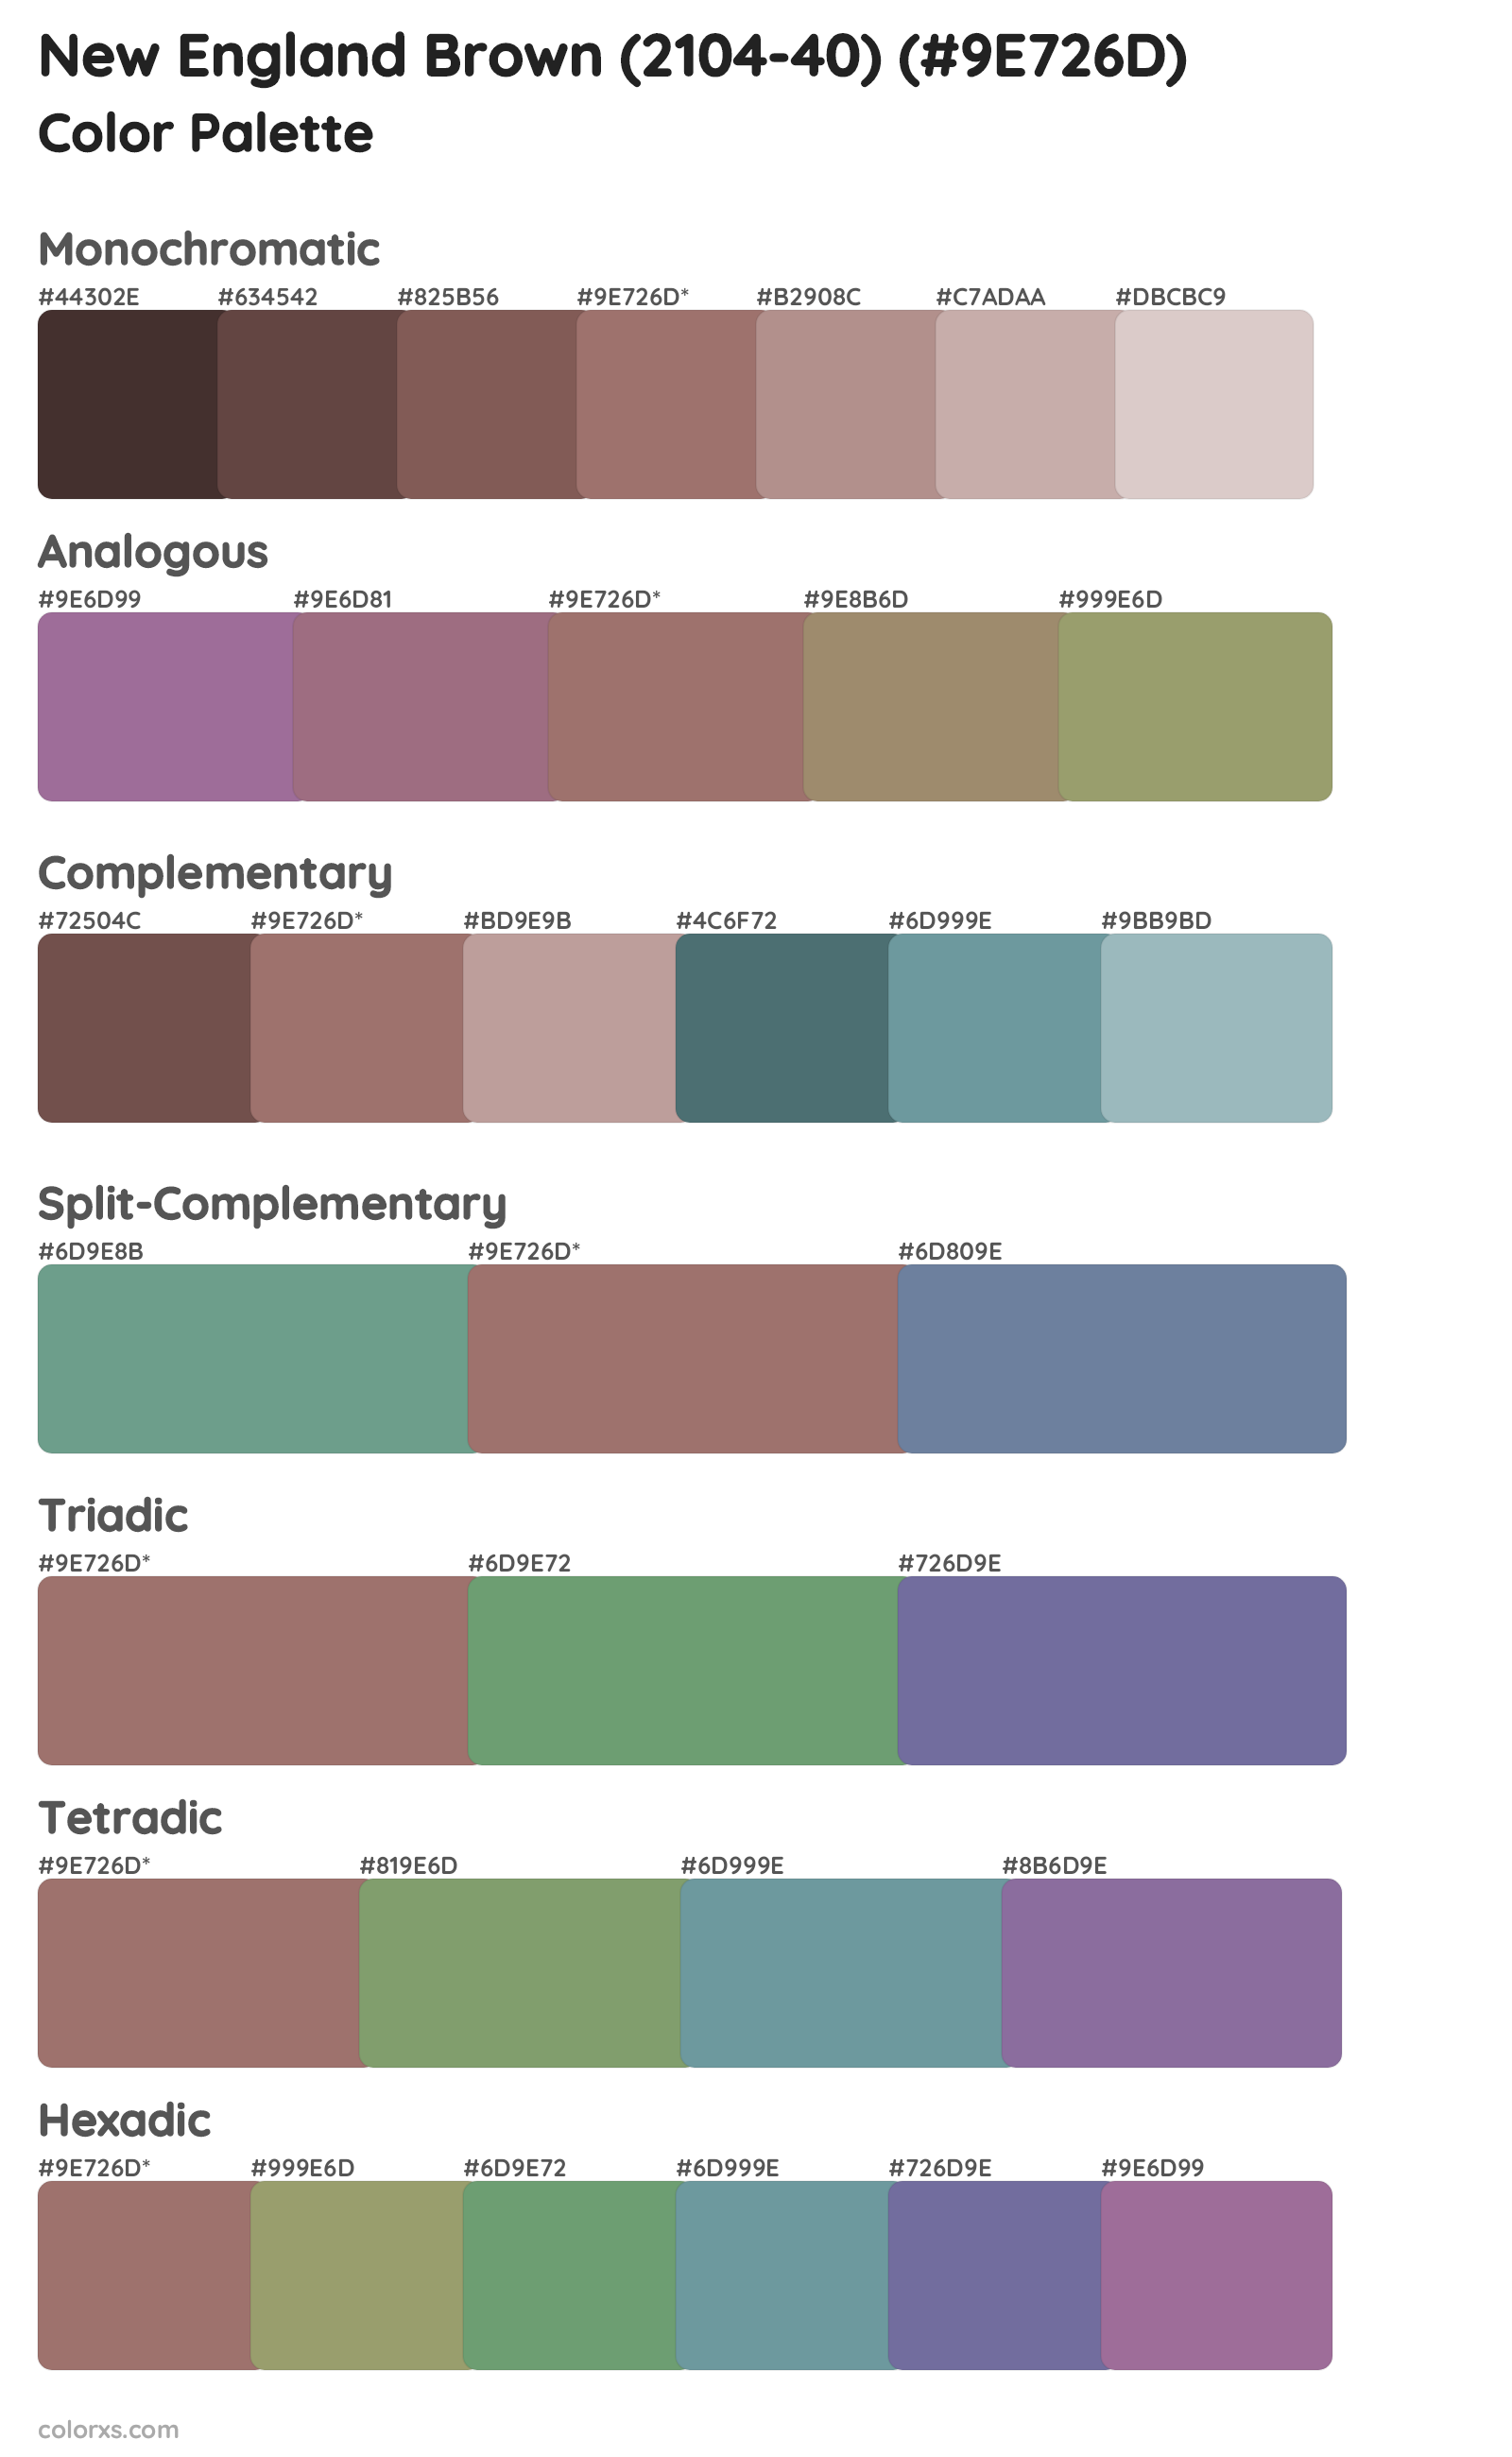 New England Brown (2104-40) Color Scheme Palettes